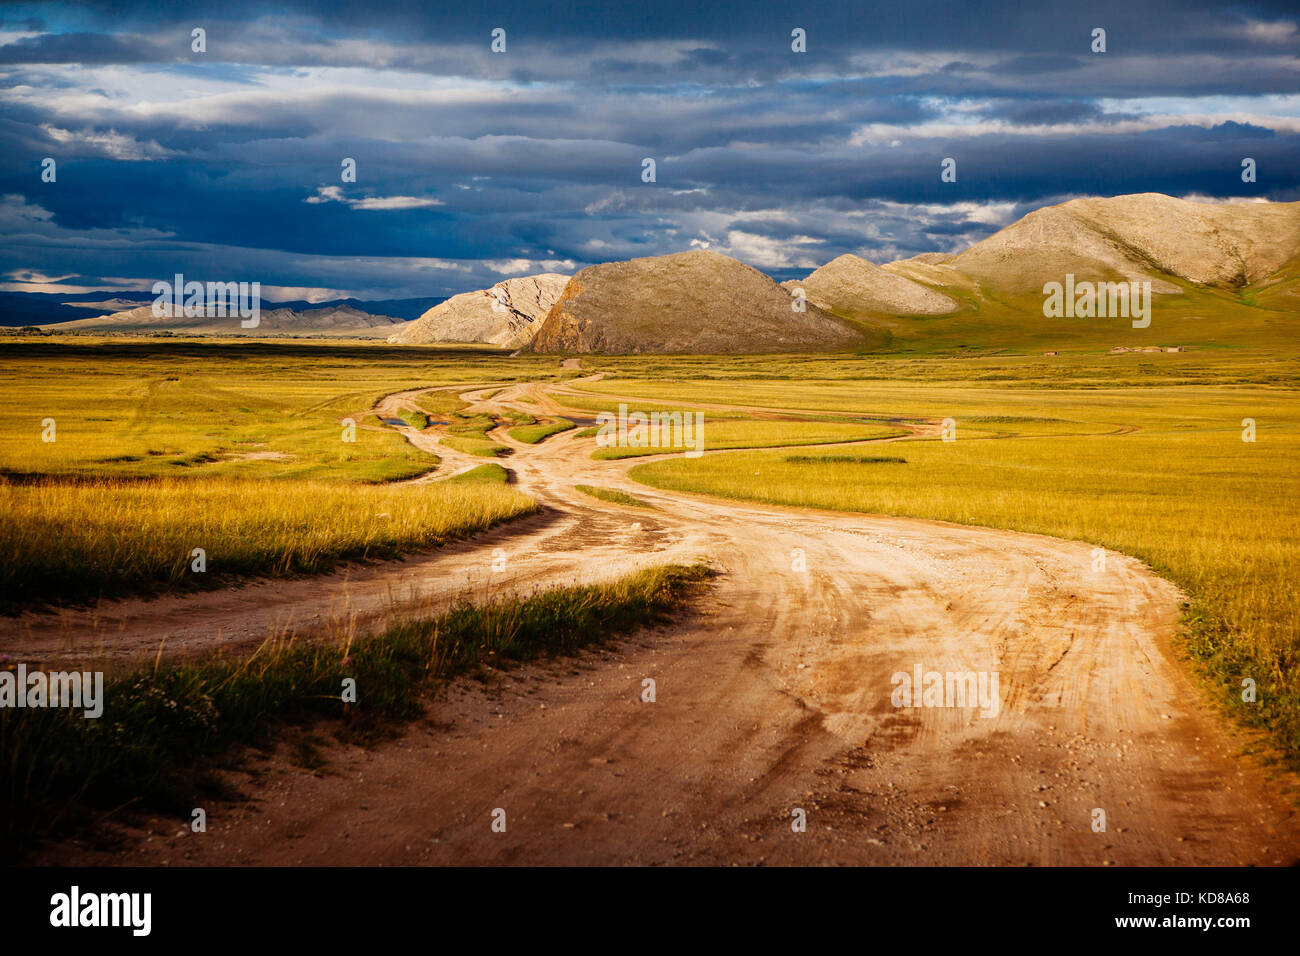 Dirt road through rural landscape, Mongolia Stock Photo